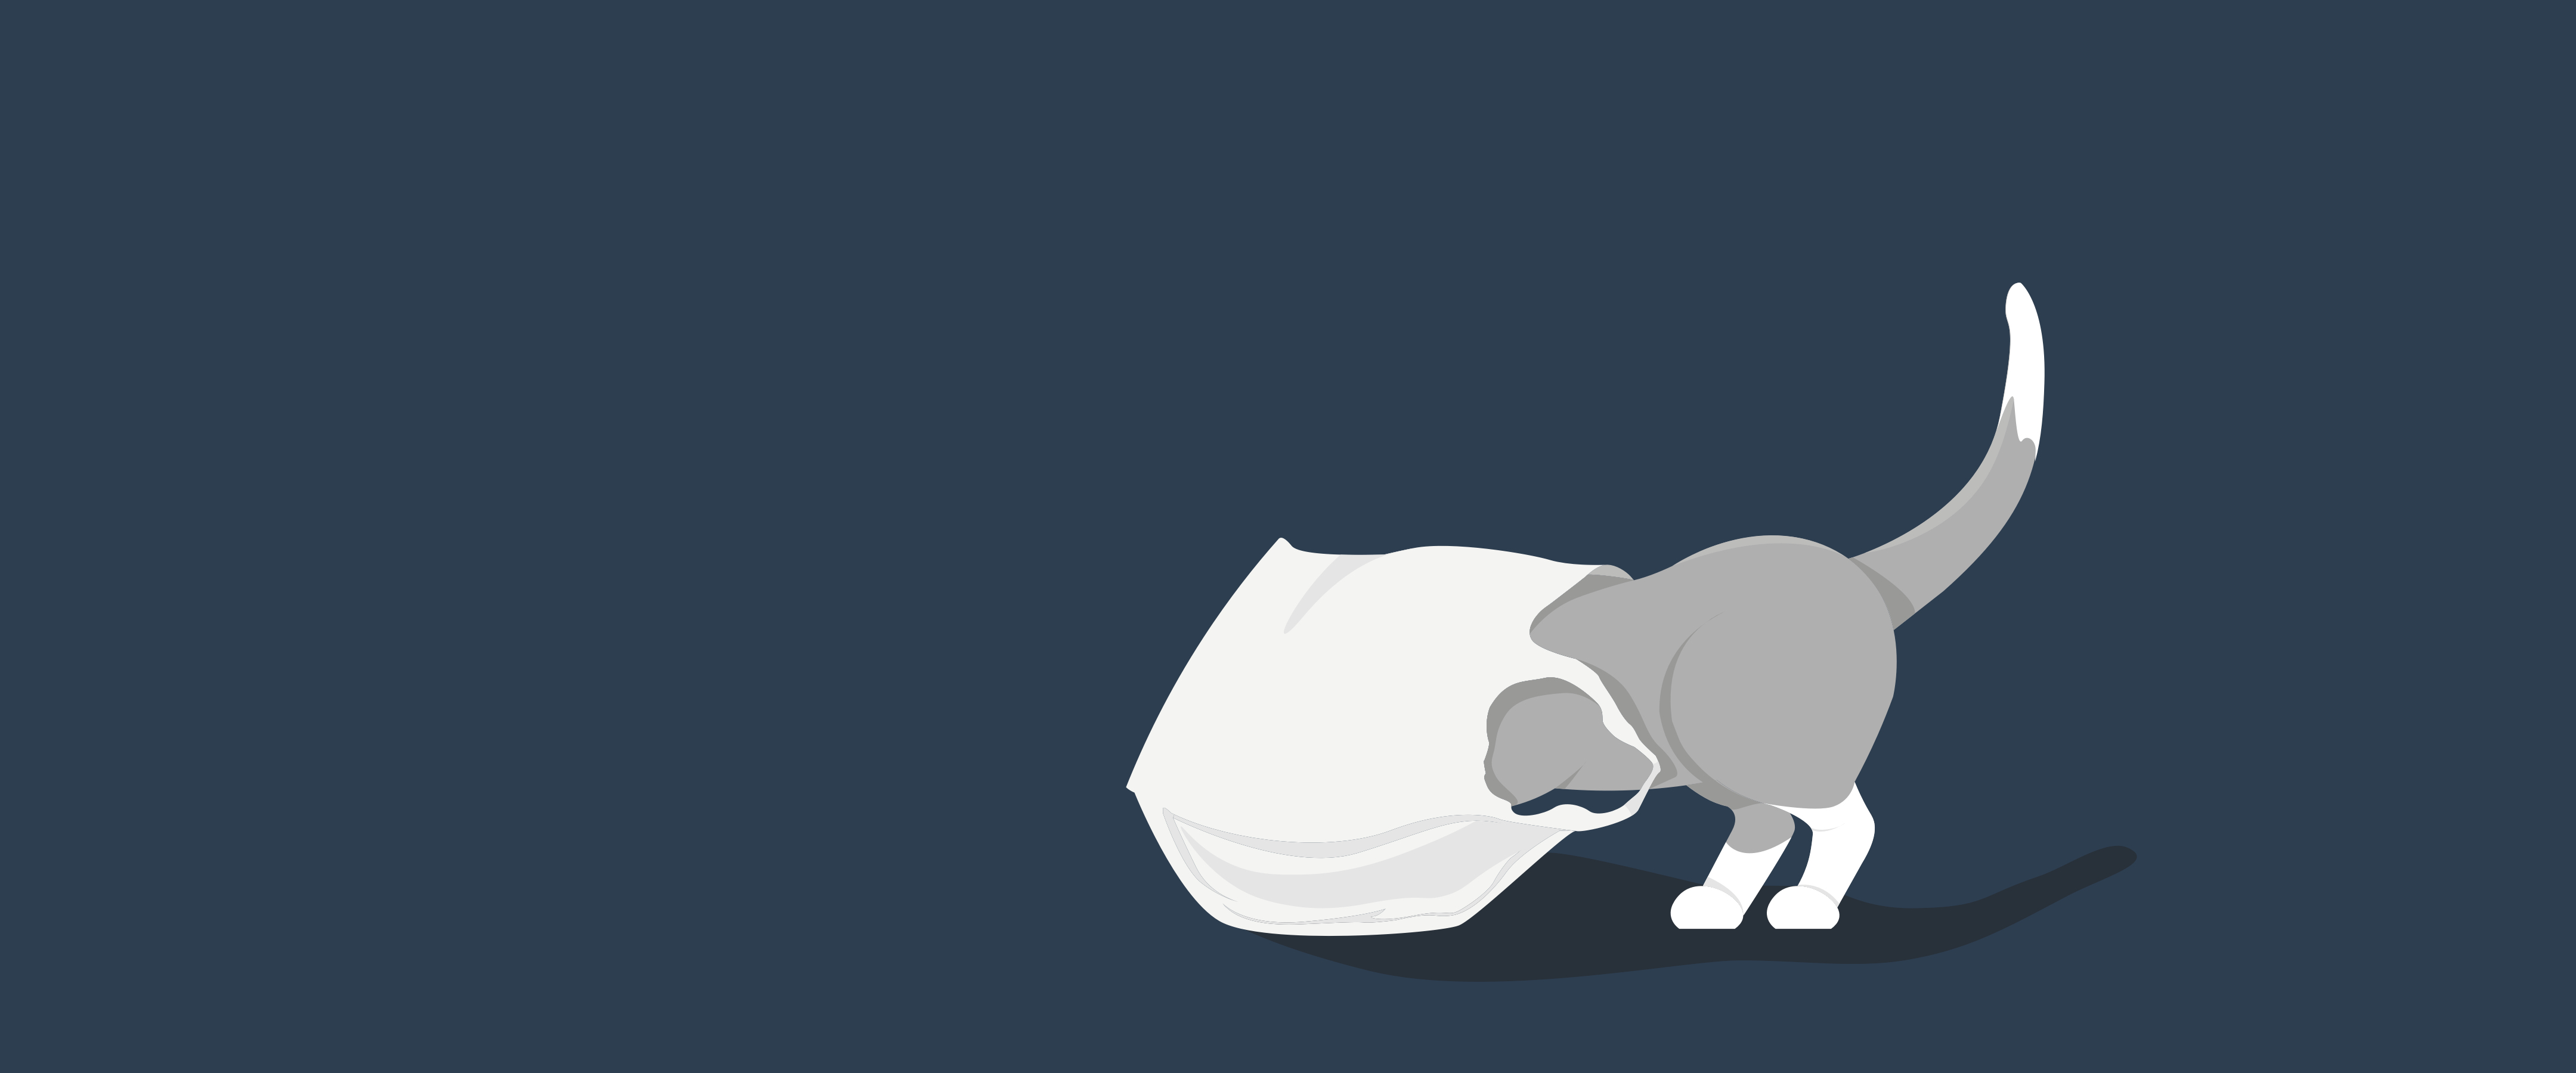 404 - Cat is looking in bag